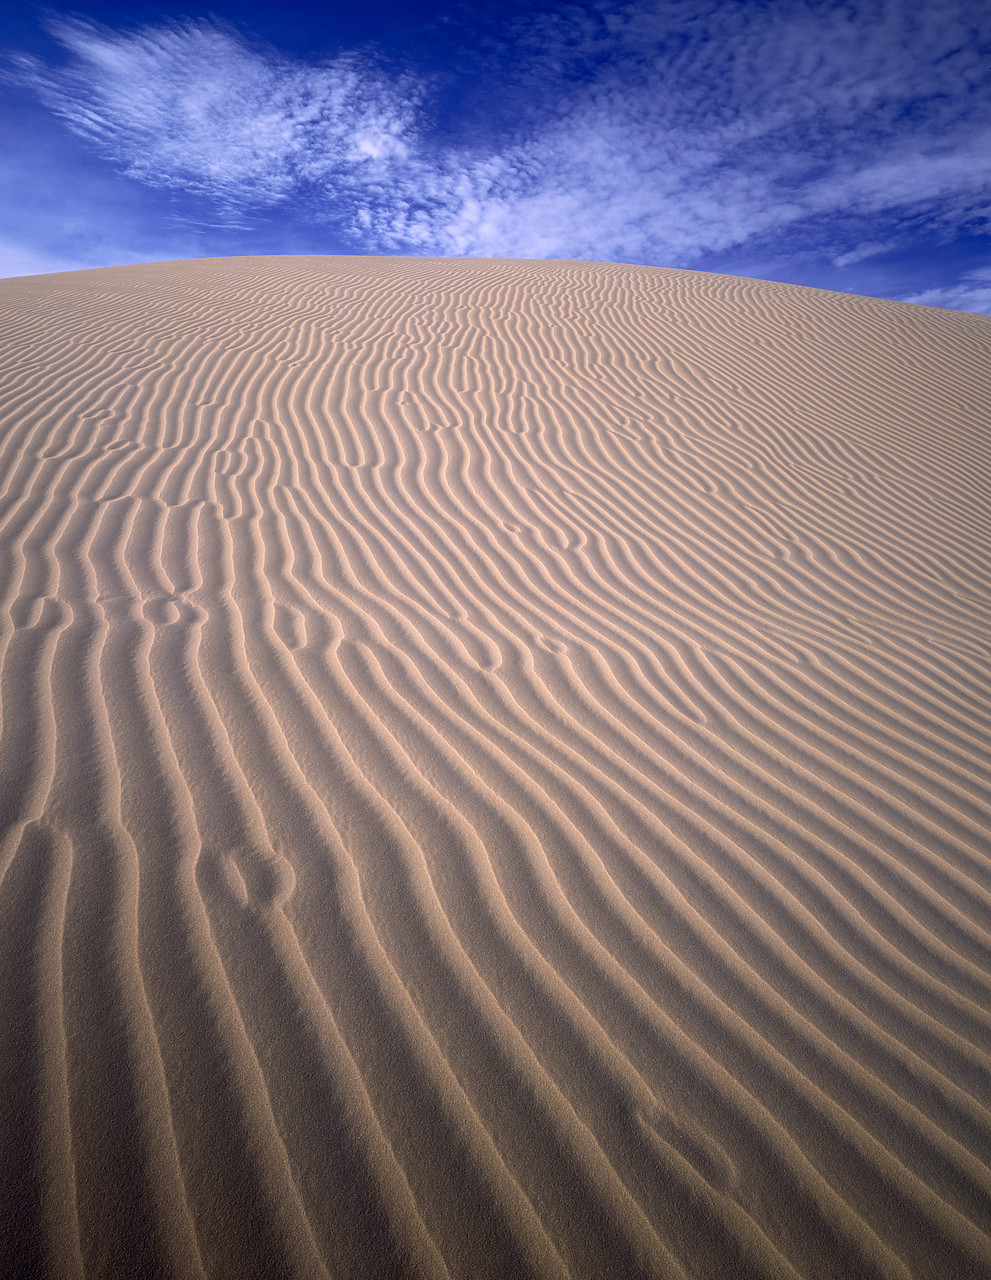 #891956-2 - Sand Dune Patterns, near Yuma, Arizona, USA